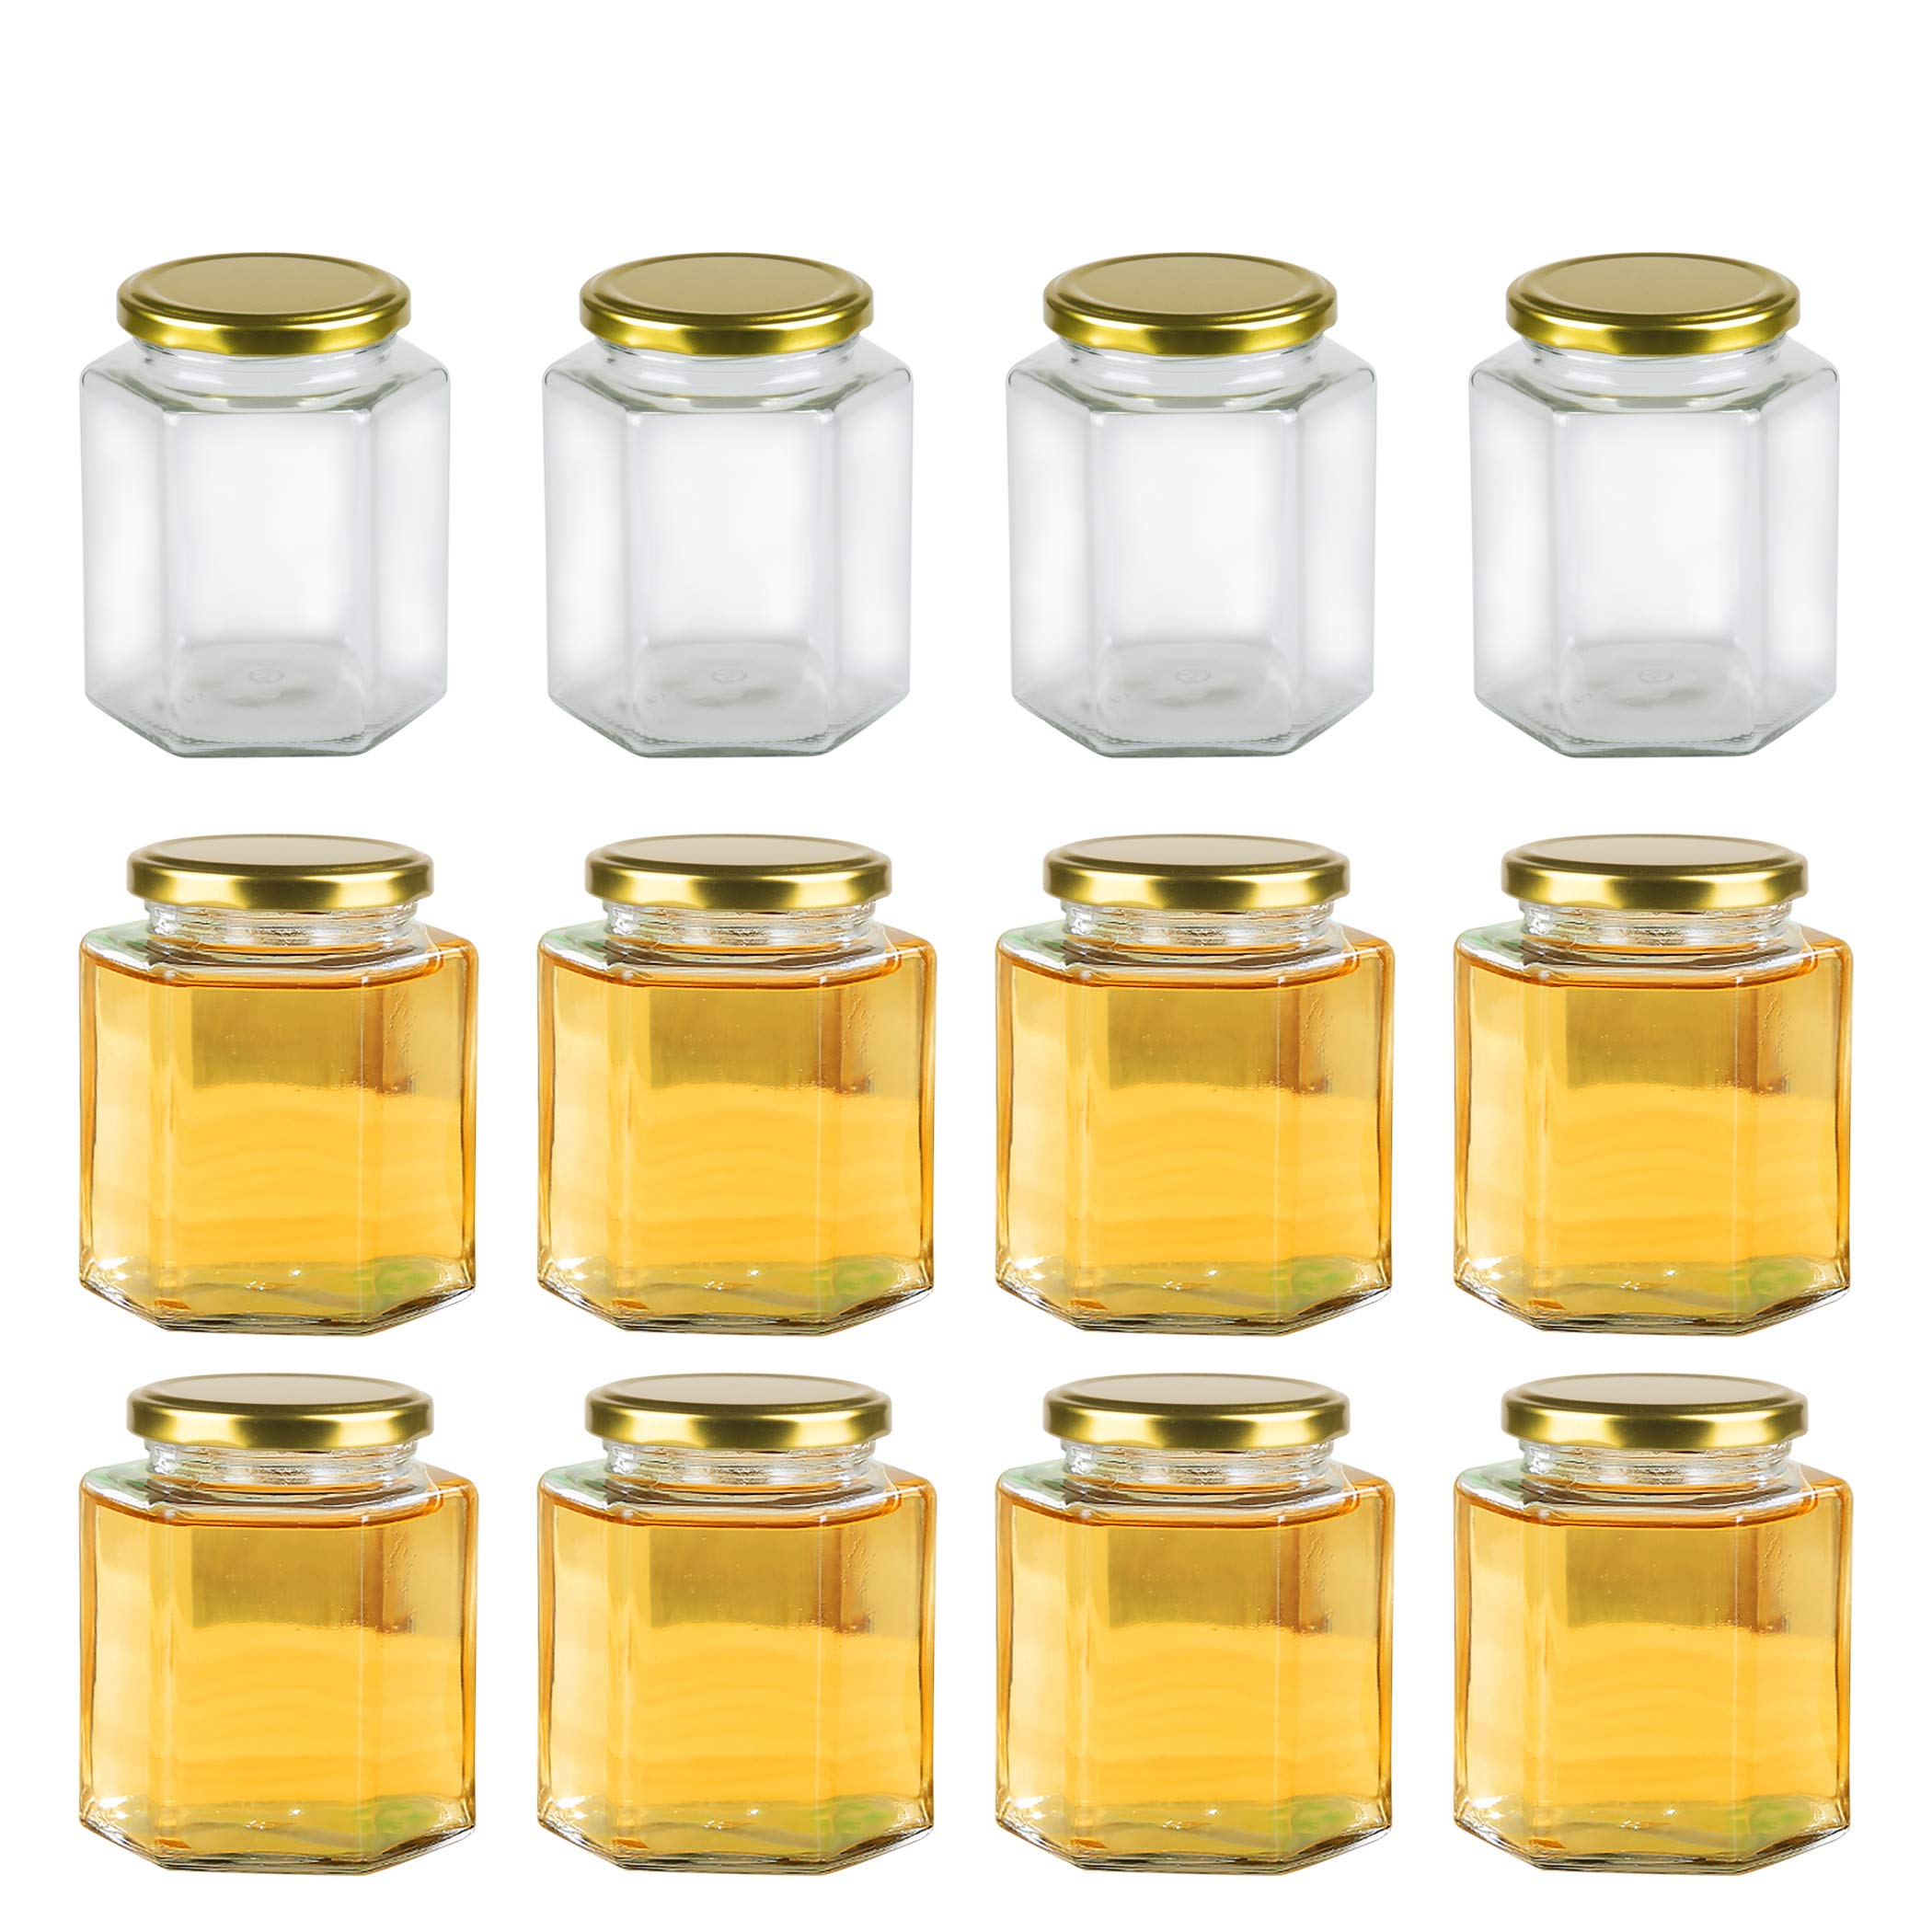 Encheng 16 oz Clear Hexagon Jars,Glass Jars With Lids(Golden),Mason Jars For Honey,Foods,Jams,Liquid,Spice Jars Herd Jars Canning Jars For Storage ...